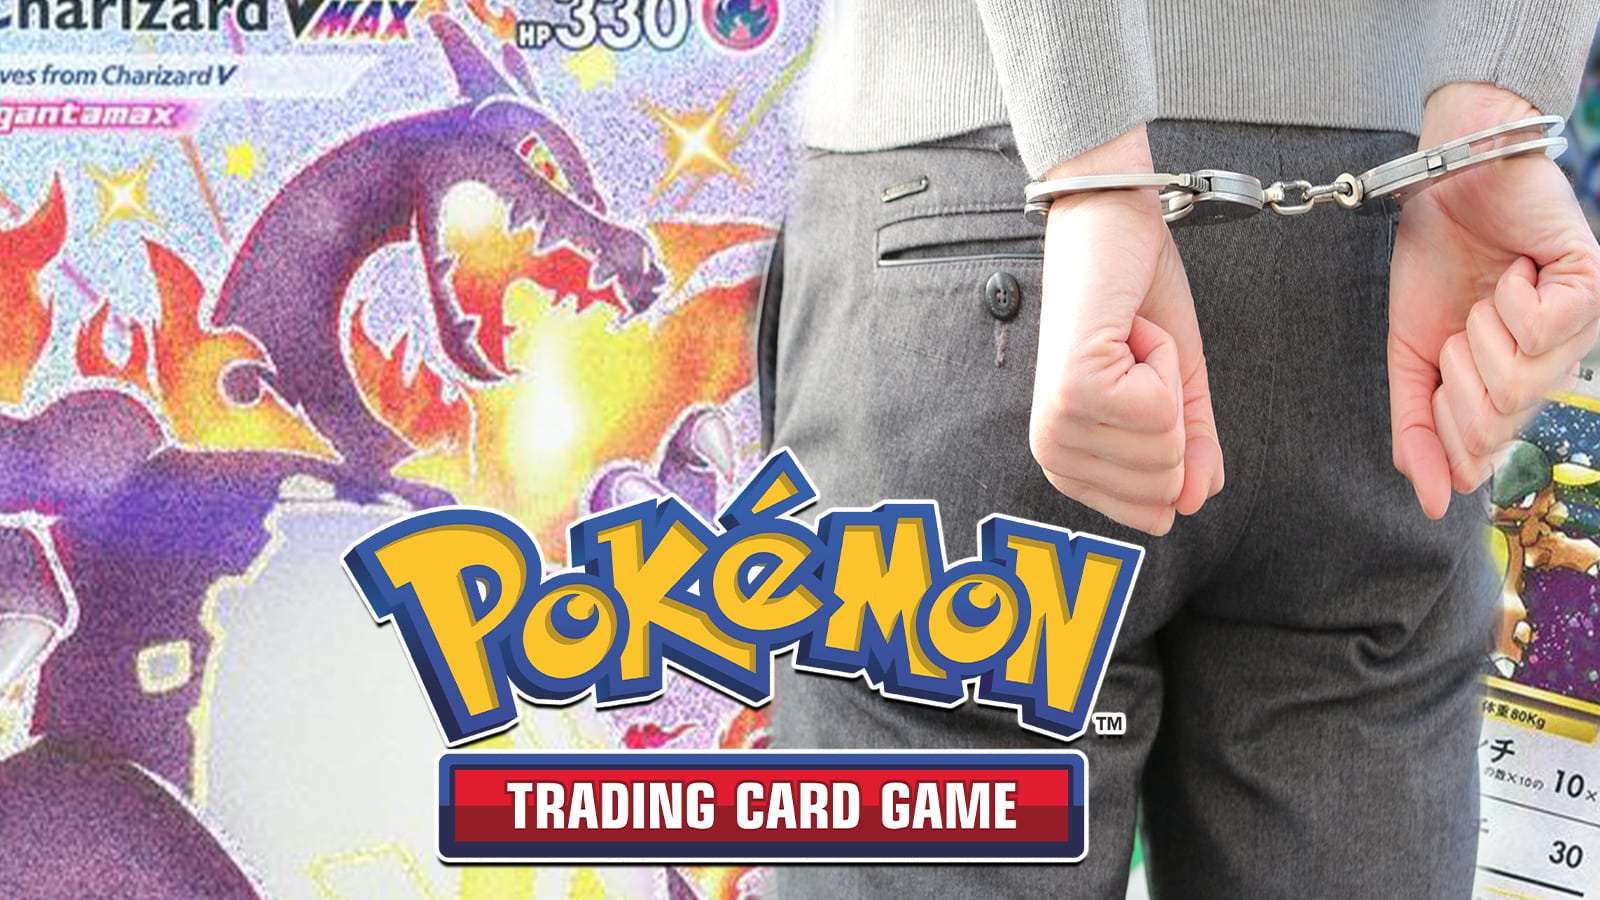 Pokemon Shining Fates Charizsard card next to man in handcuffs